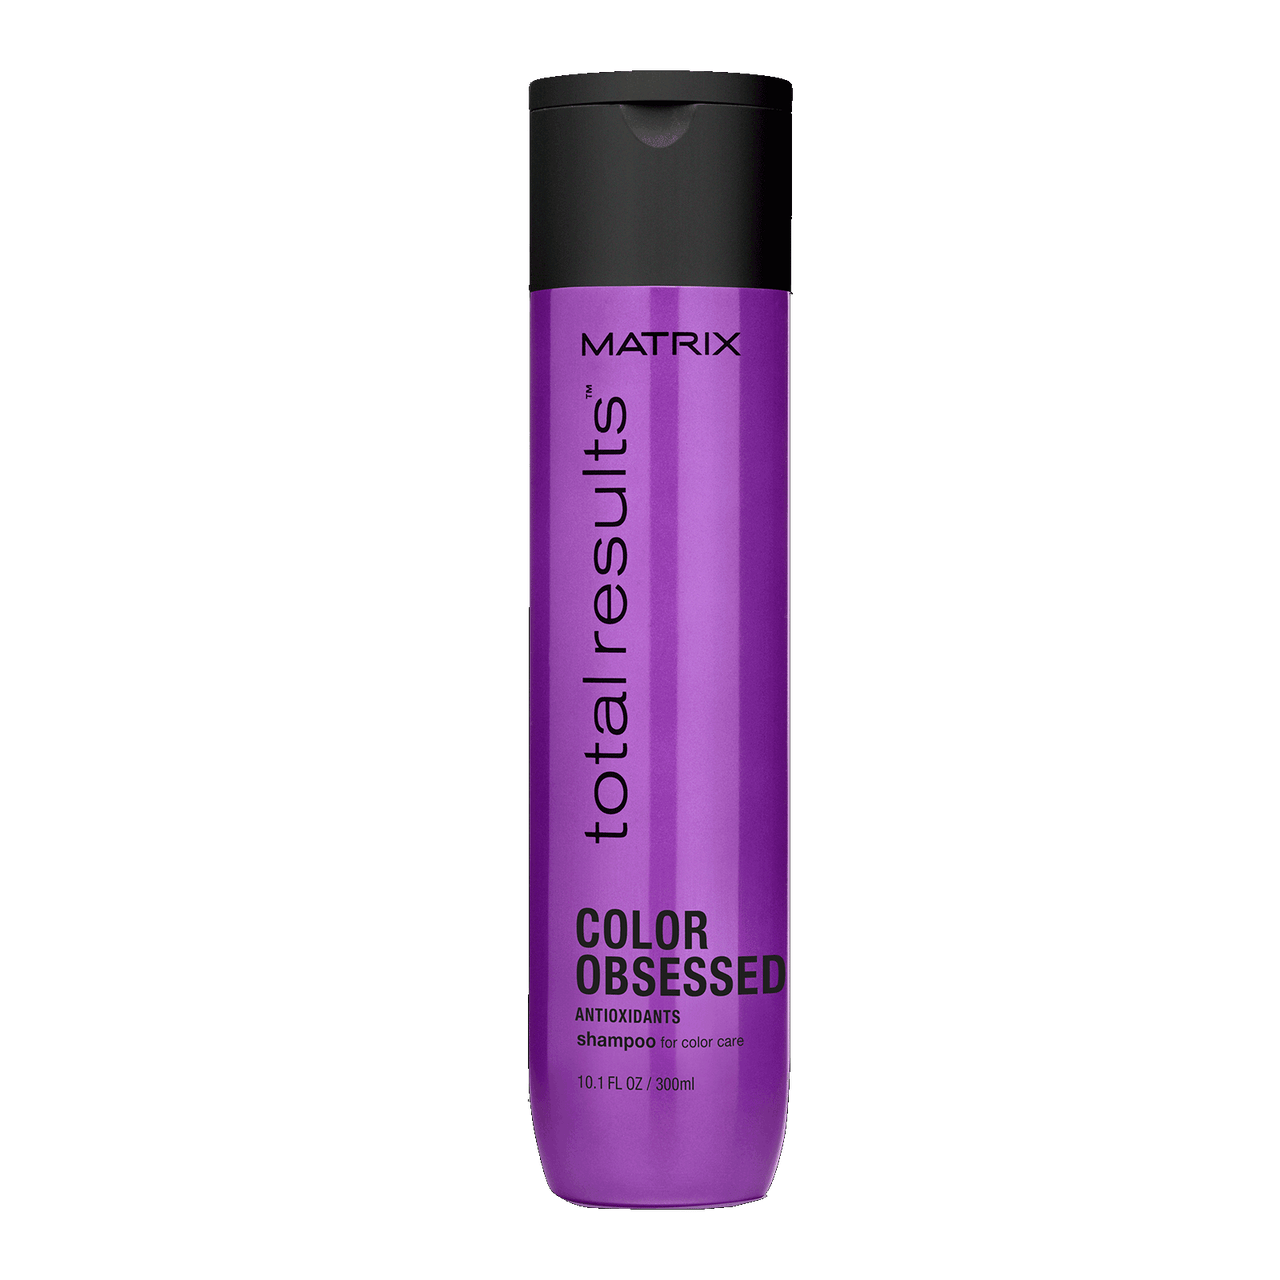 Matrix Color Obsessed Shampoo 10.1 fl oz